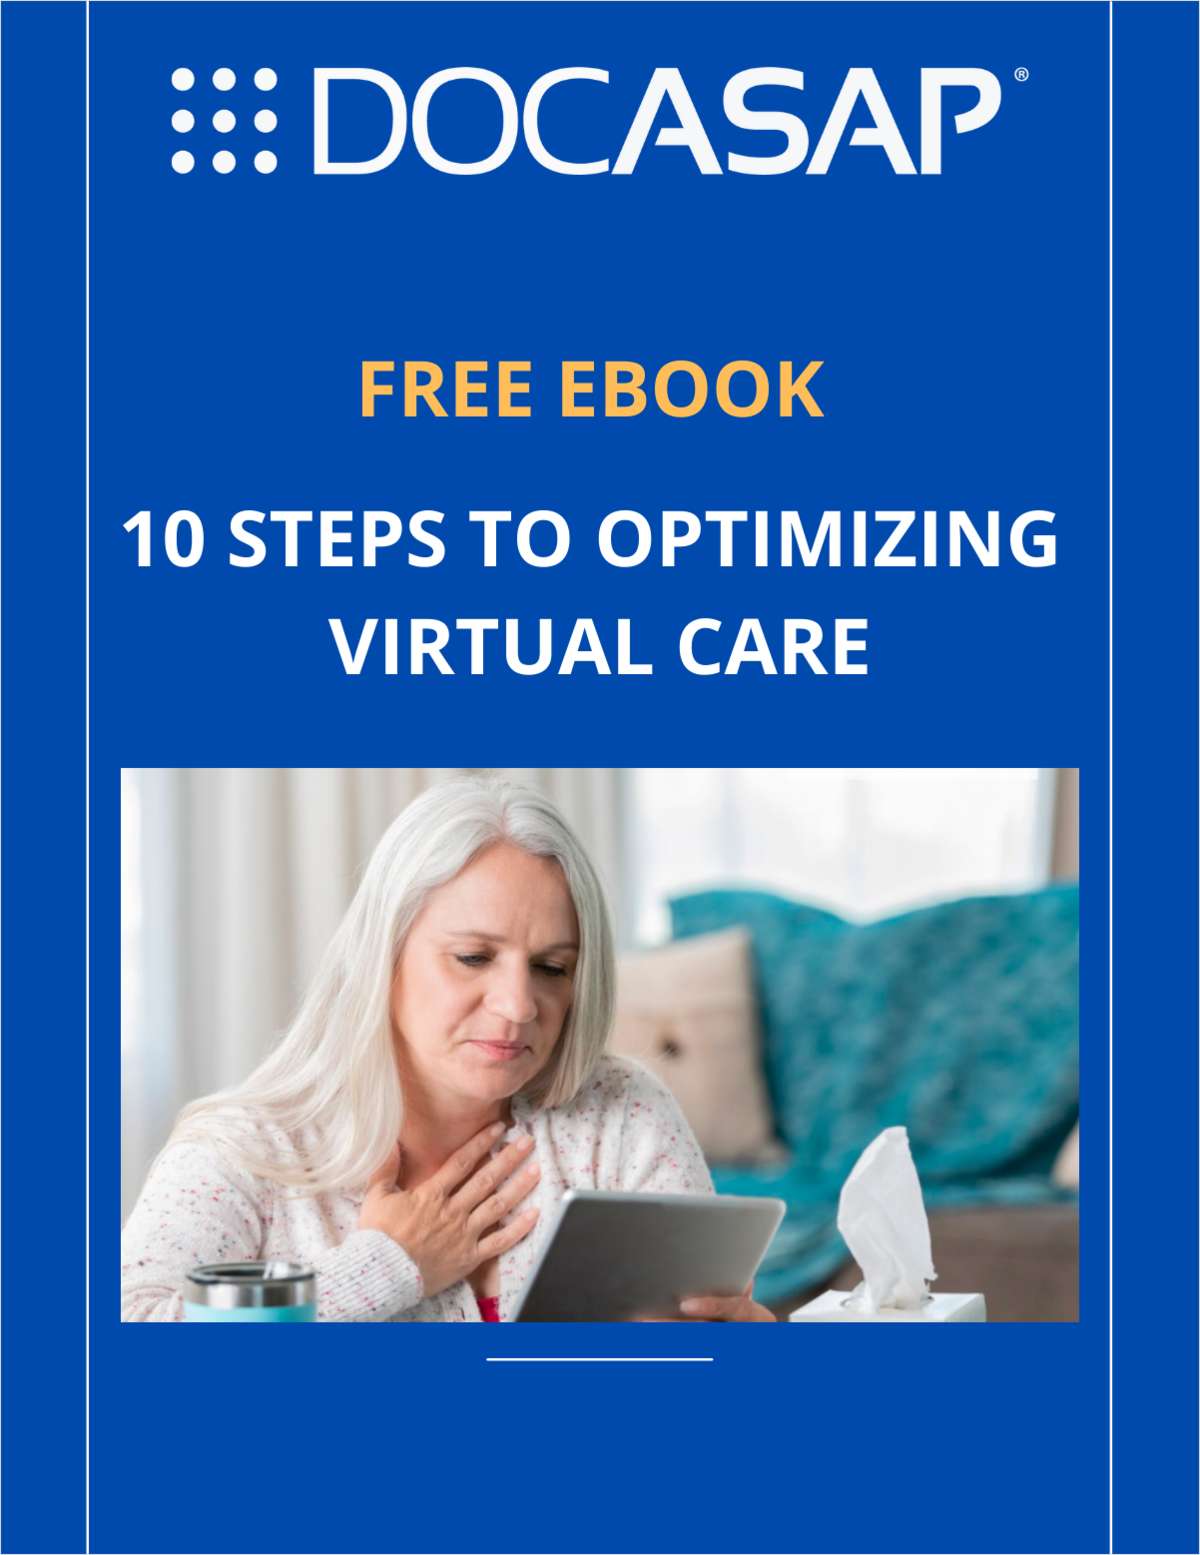 10 Steps to Optimizing Virtual Care | DocASAP